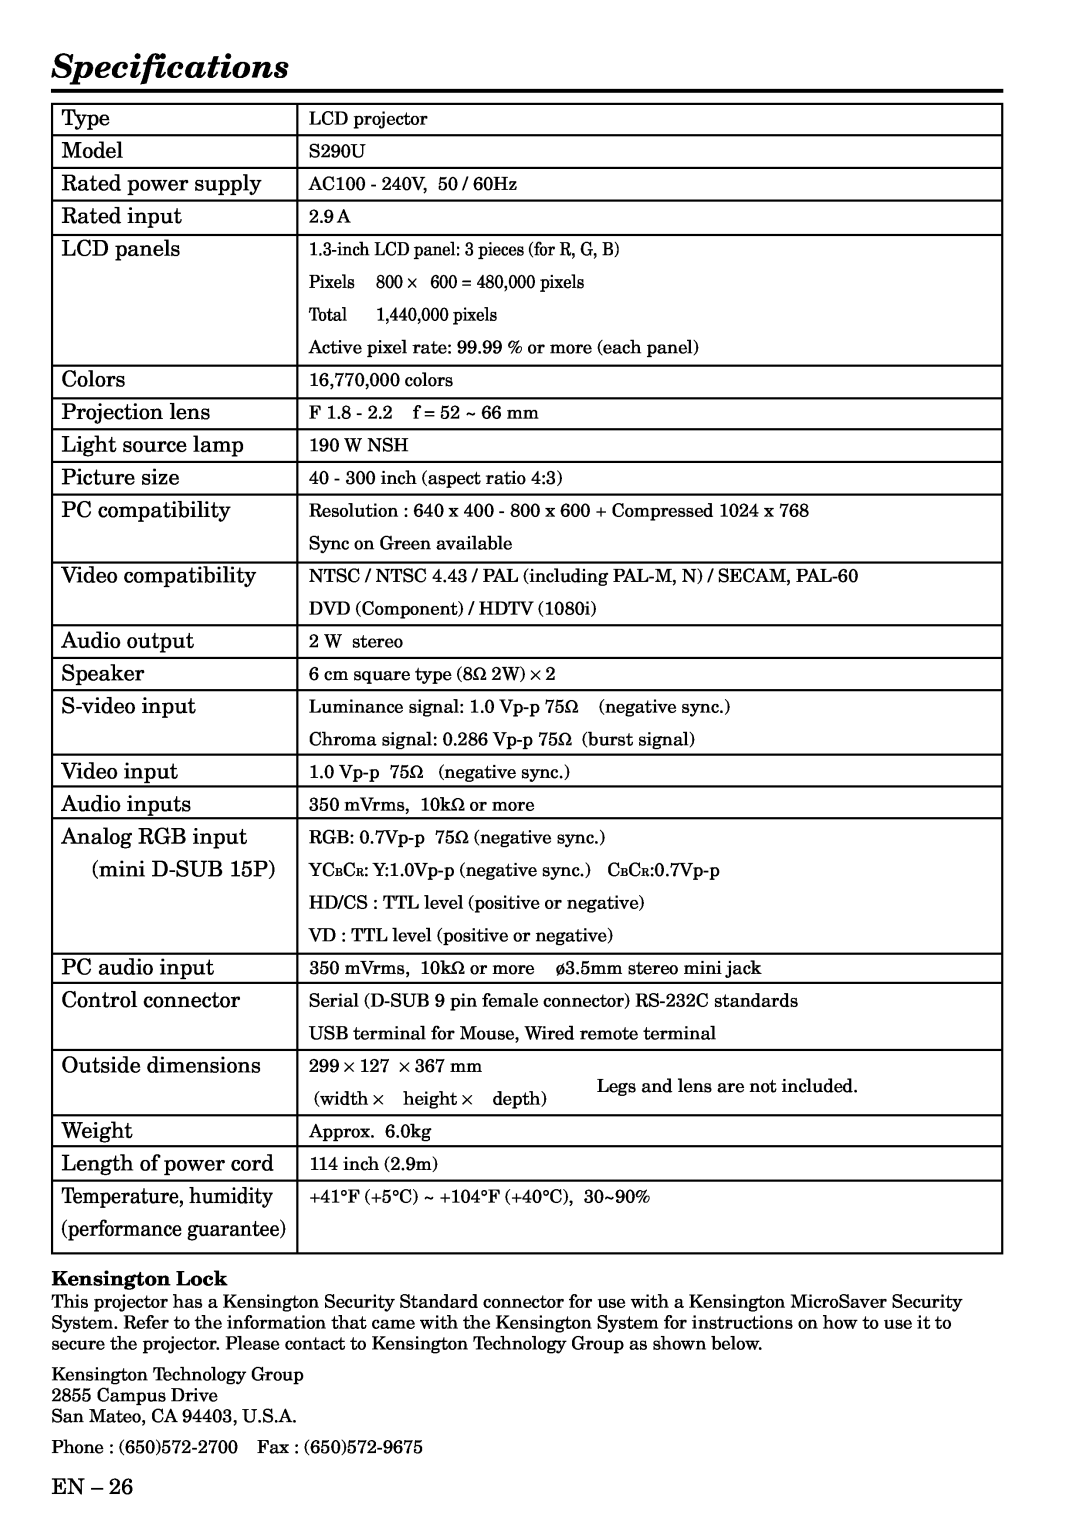 Mitsubishi Electronics S290U user manual Specifications, Kensington Lock 